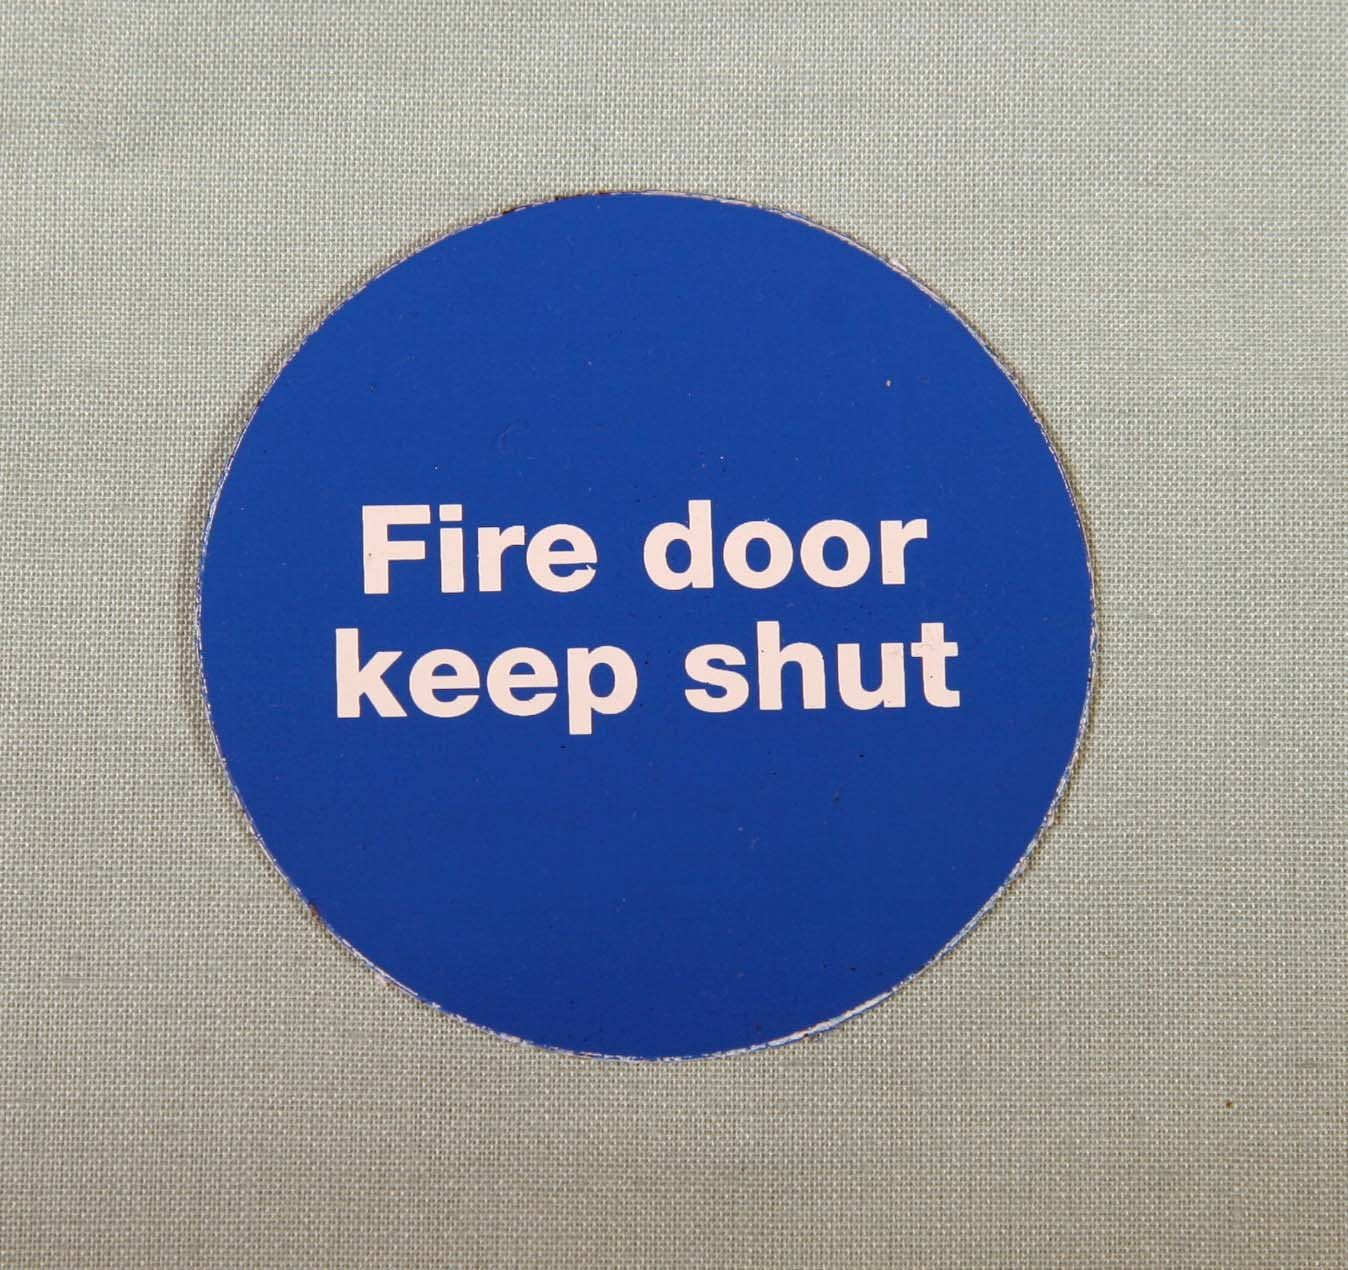 Fire Door Keep Shut 60Mm Plastic Self Adhesive Sign